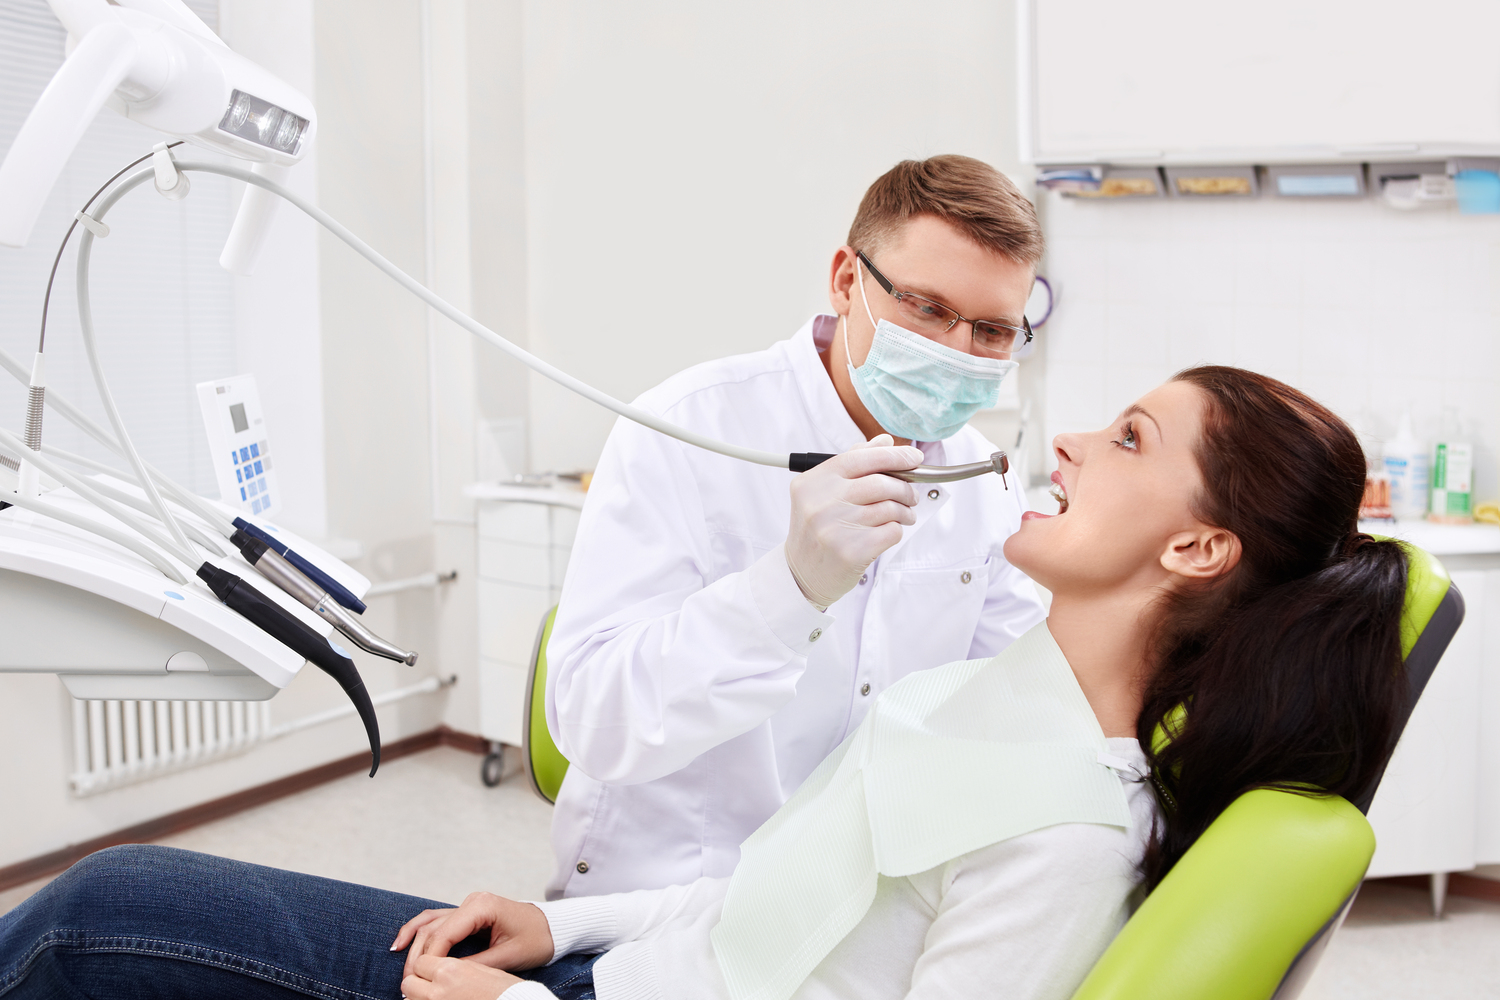 the dentist treats teeth of patient 2023 11 27 04 59 02 utc 1